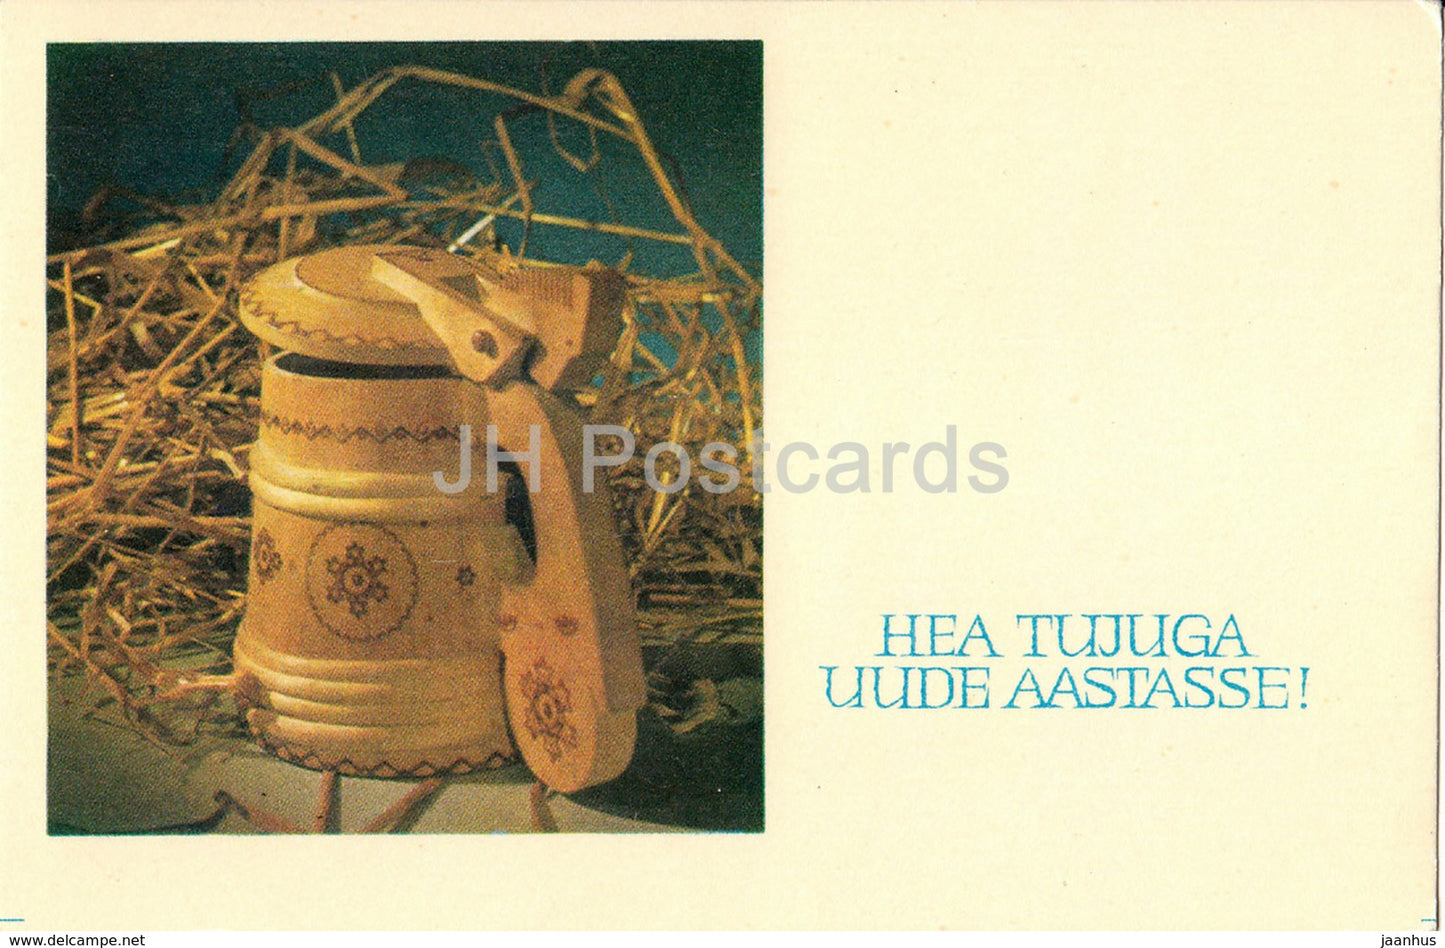 New Year Greeting Card - Beer Mug - 1973 - Estonia USSR - unused - JH Postcards